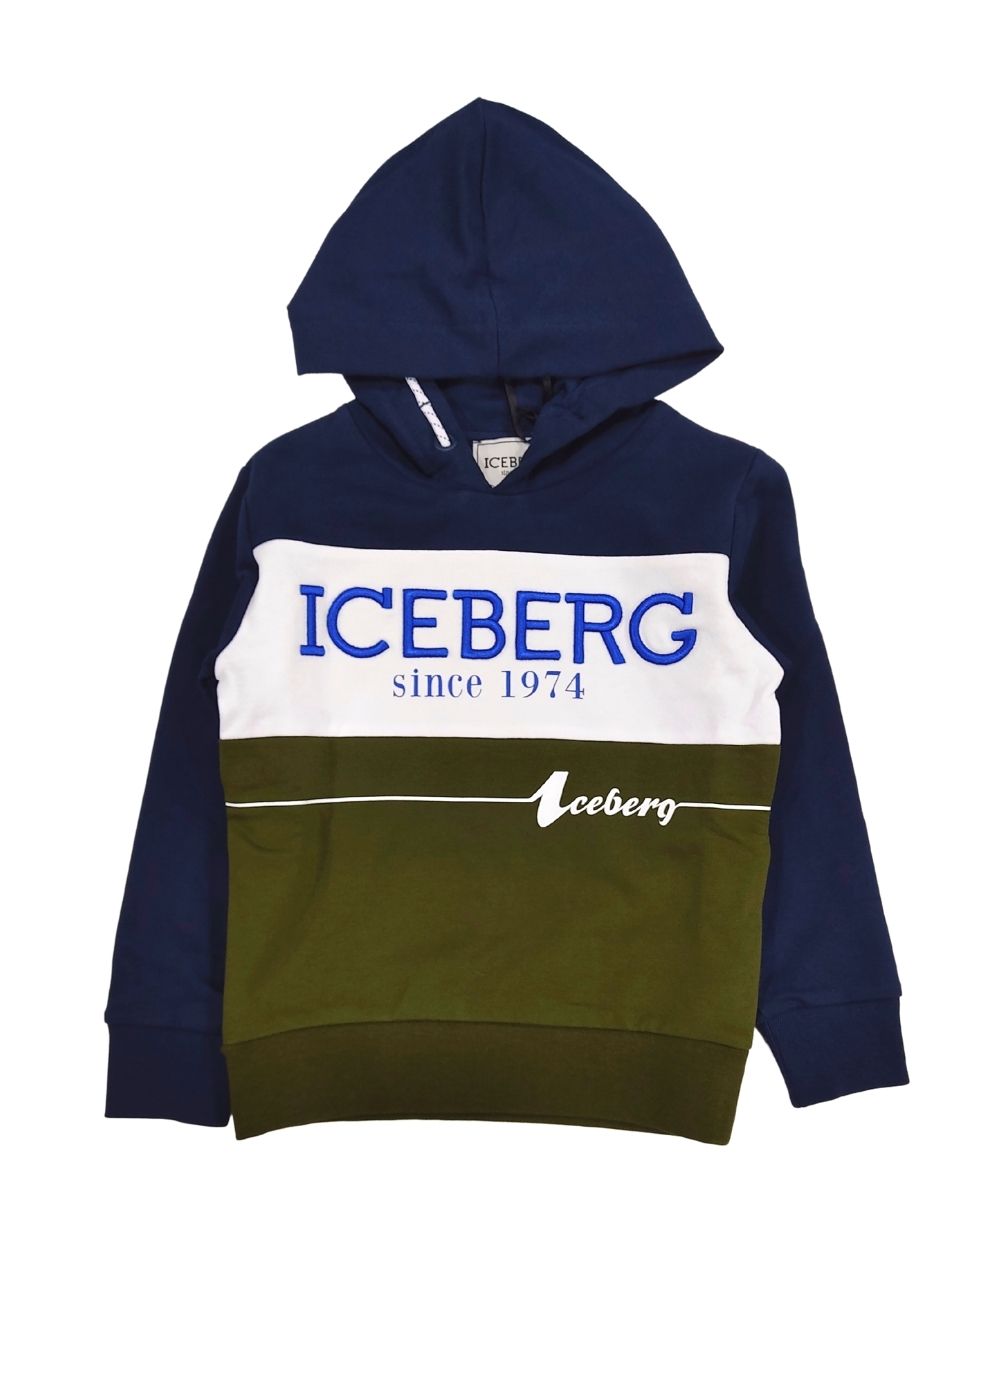 Featured image for “Iceberg felpa multicolore”